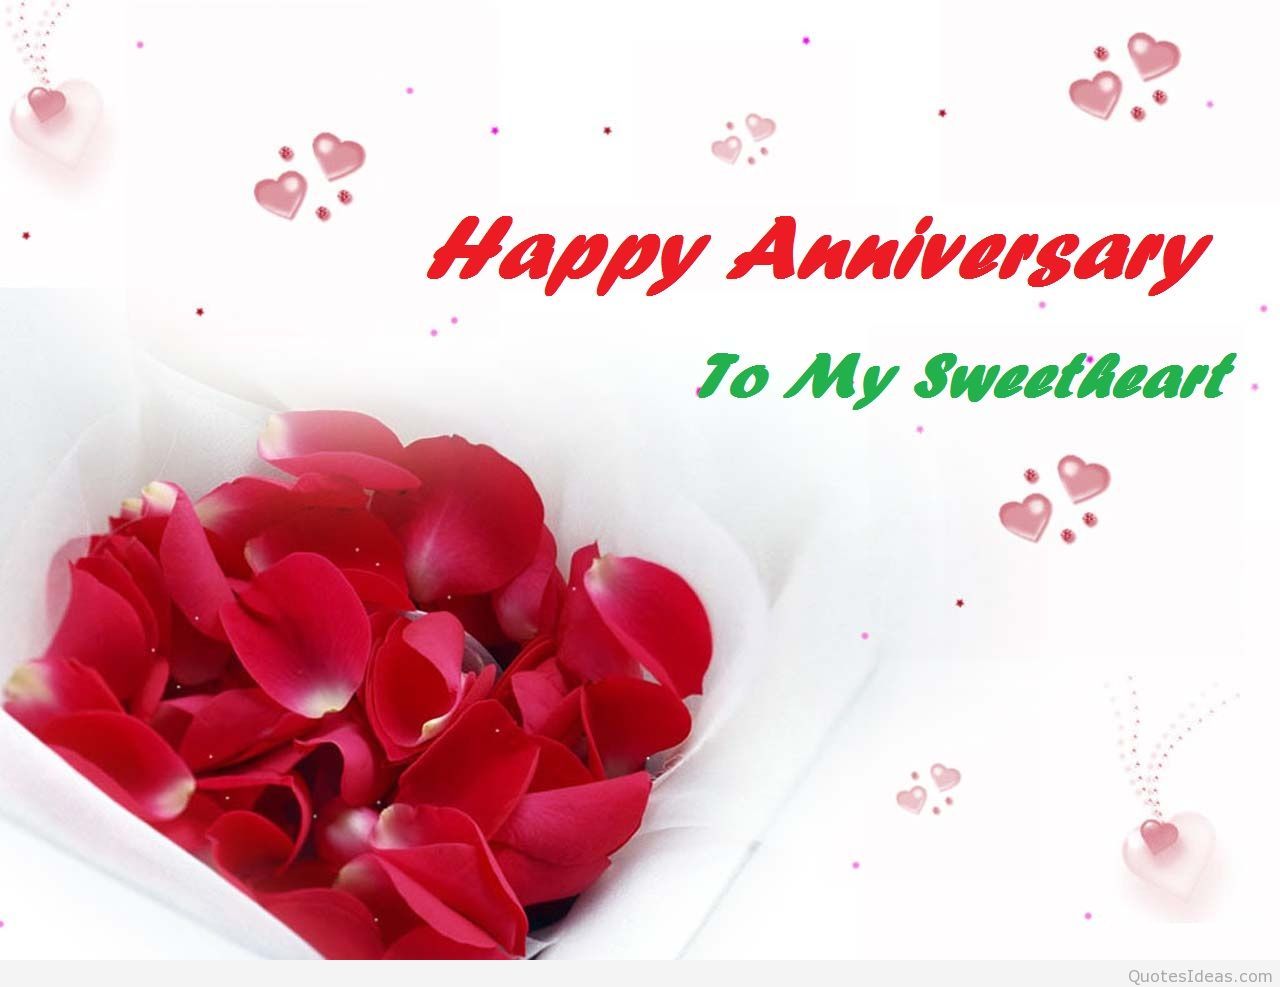 Happy Anniversary sweetheart wallpaper hd